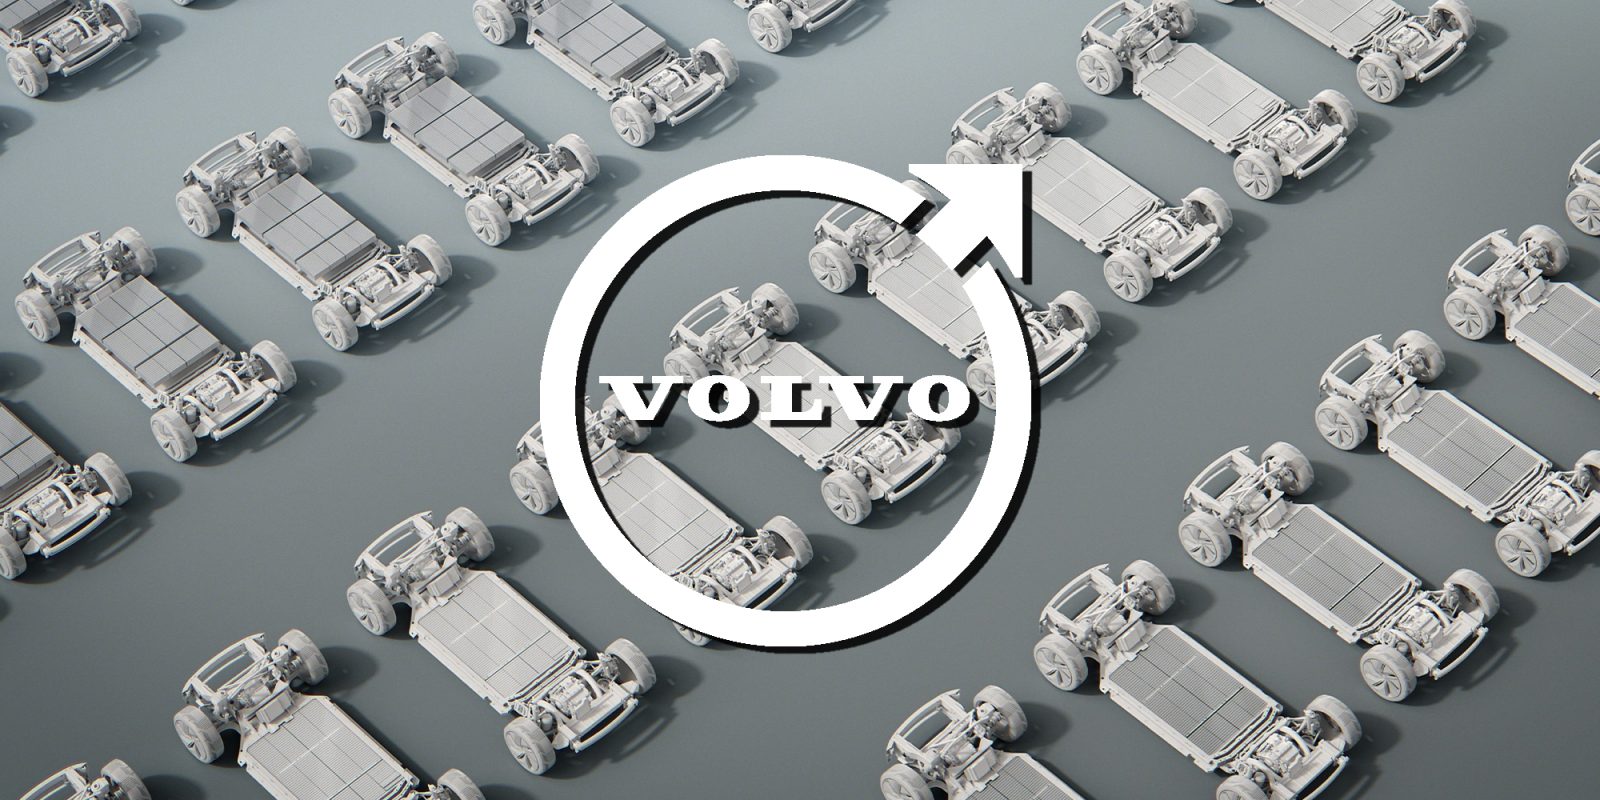 Volvo cars plant